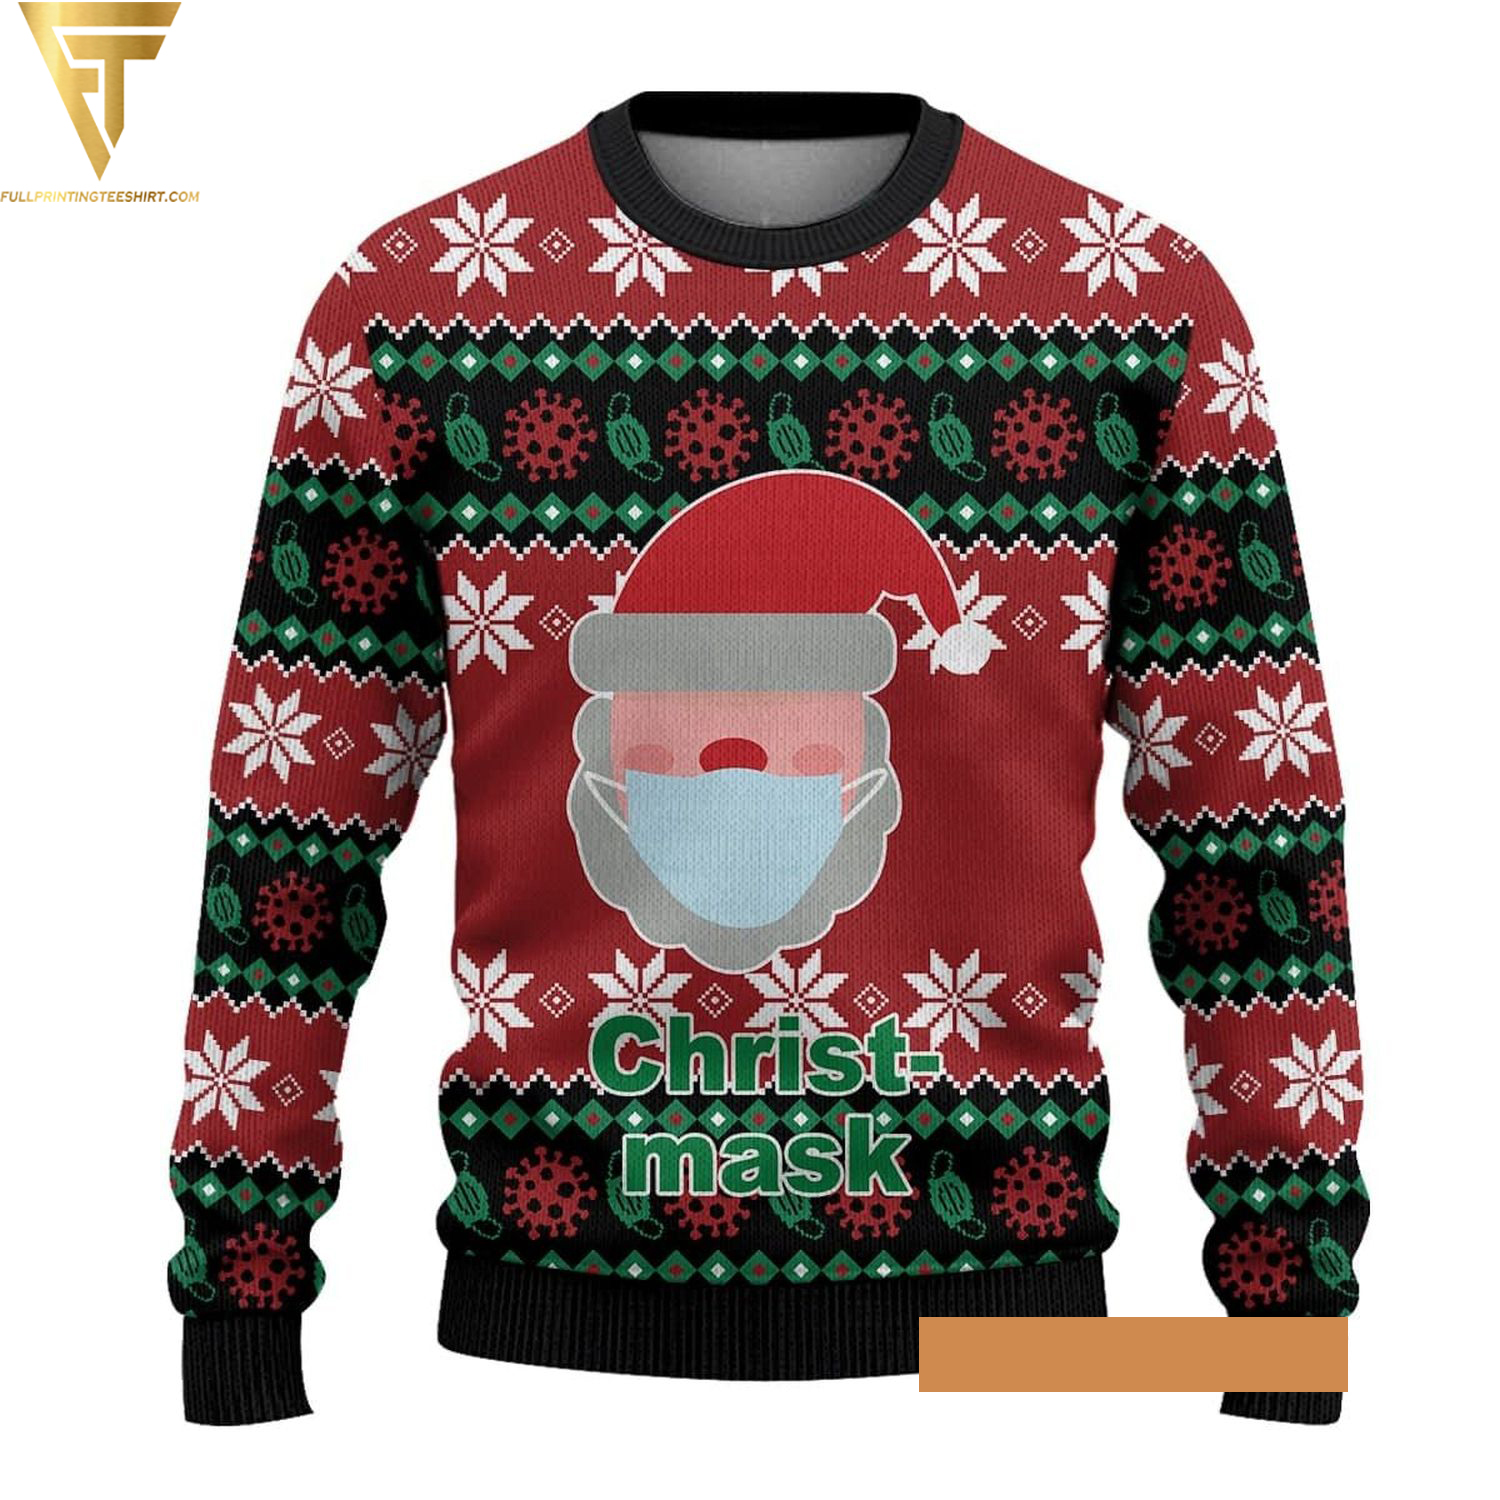 Santa claus chris-mask ugly christmas sweater - Copy (4)